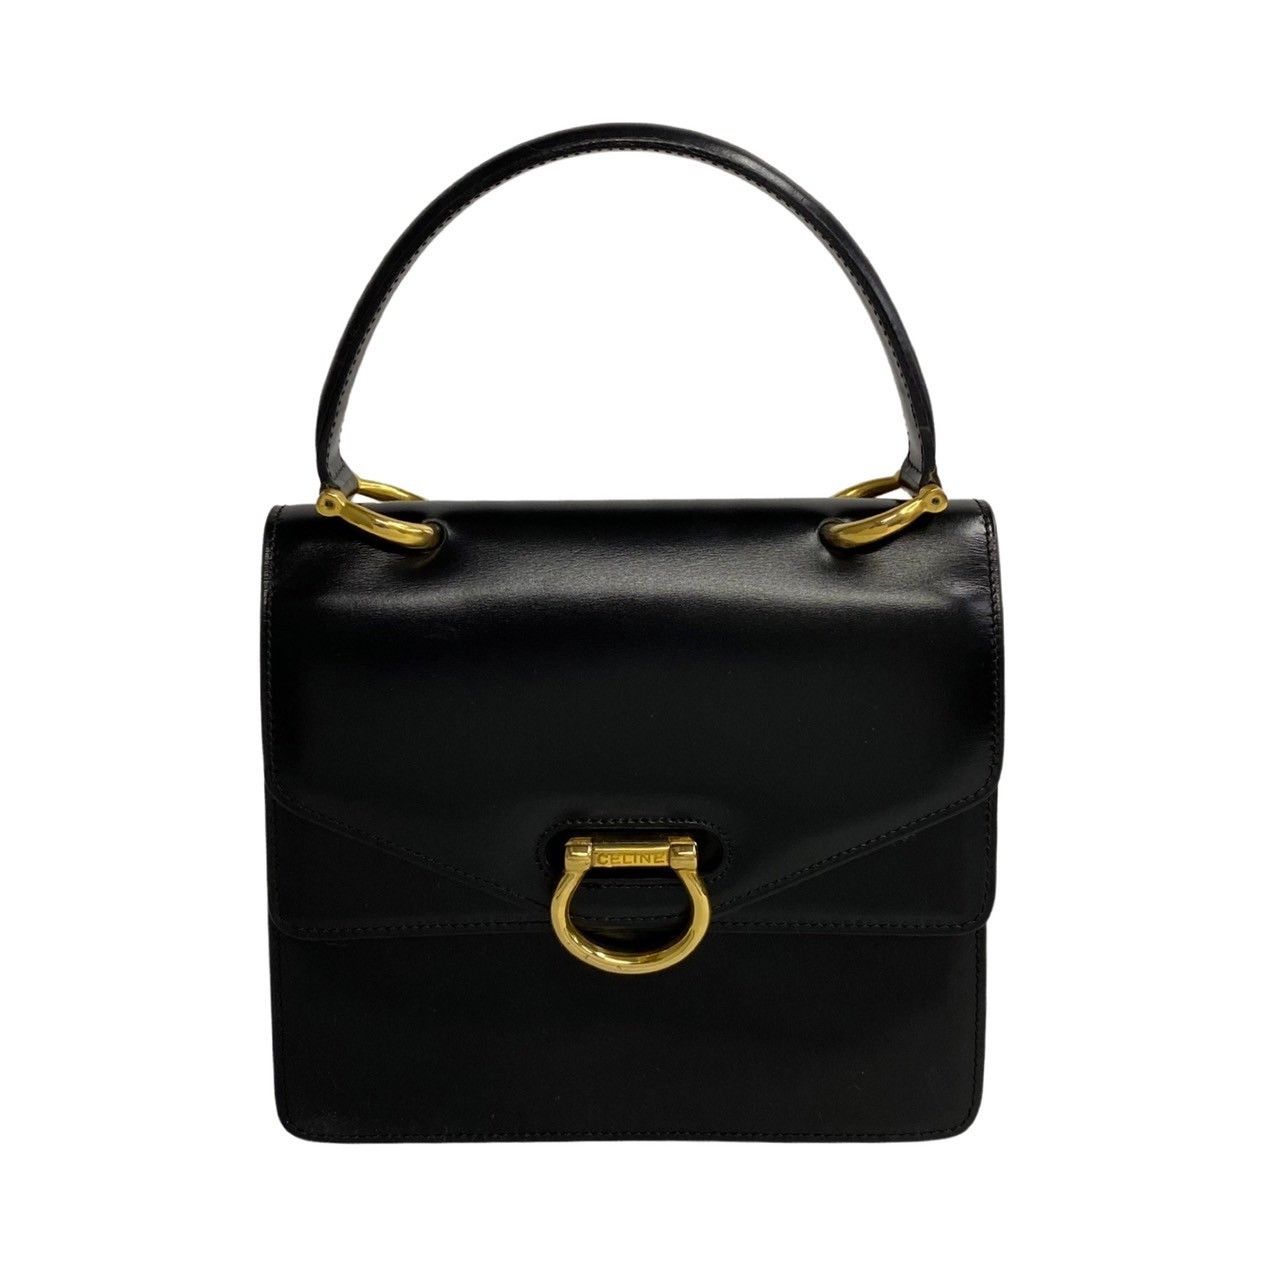 image of Celine Leather Handbag in Black, Women's